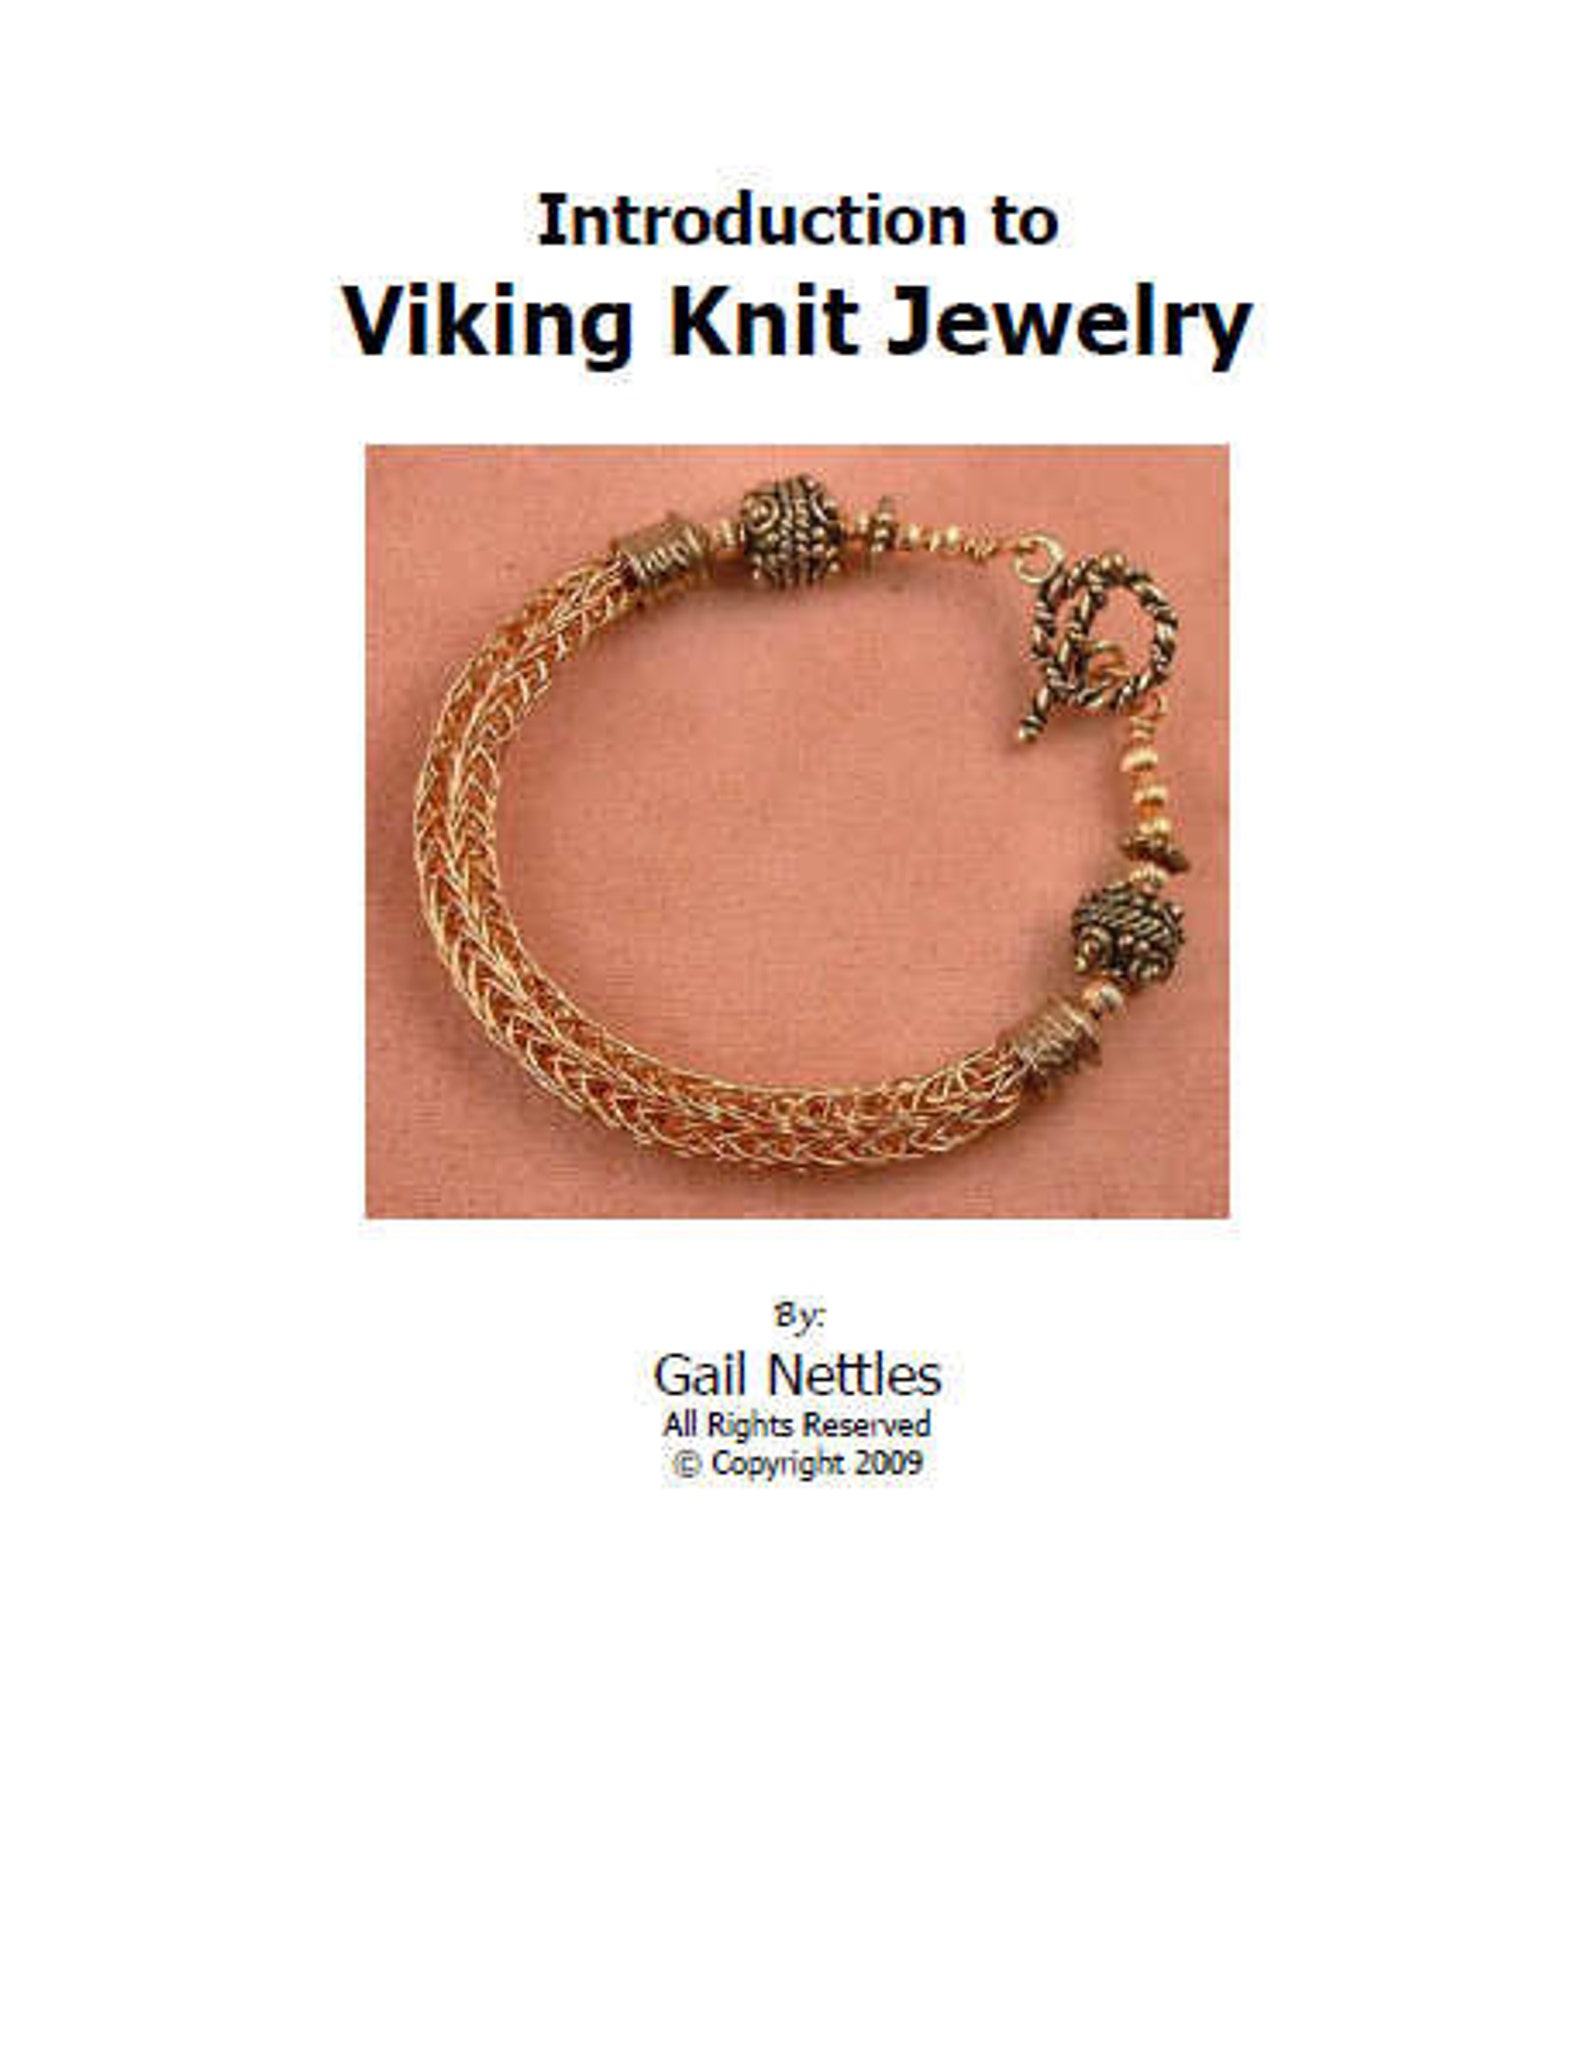 viking-knit-tutorial-intro-to-viking-knit-jewelry-etsy